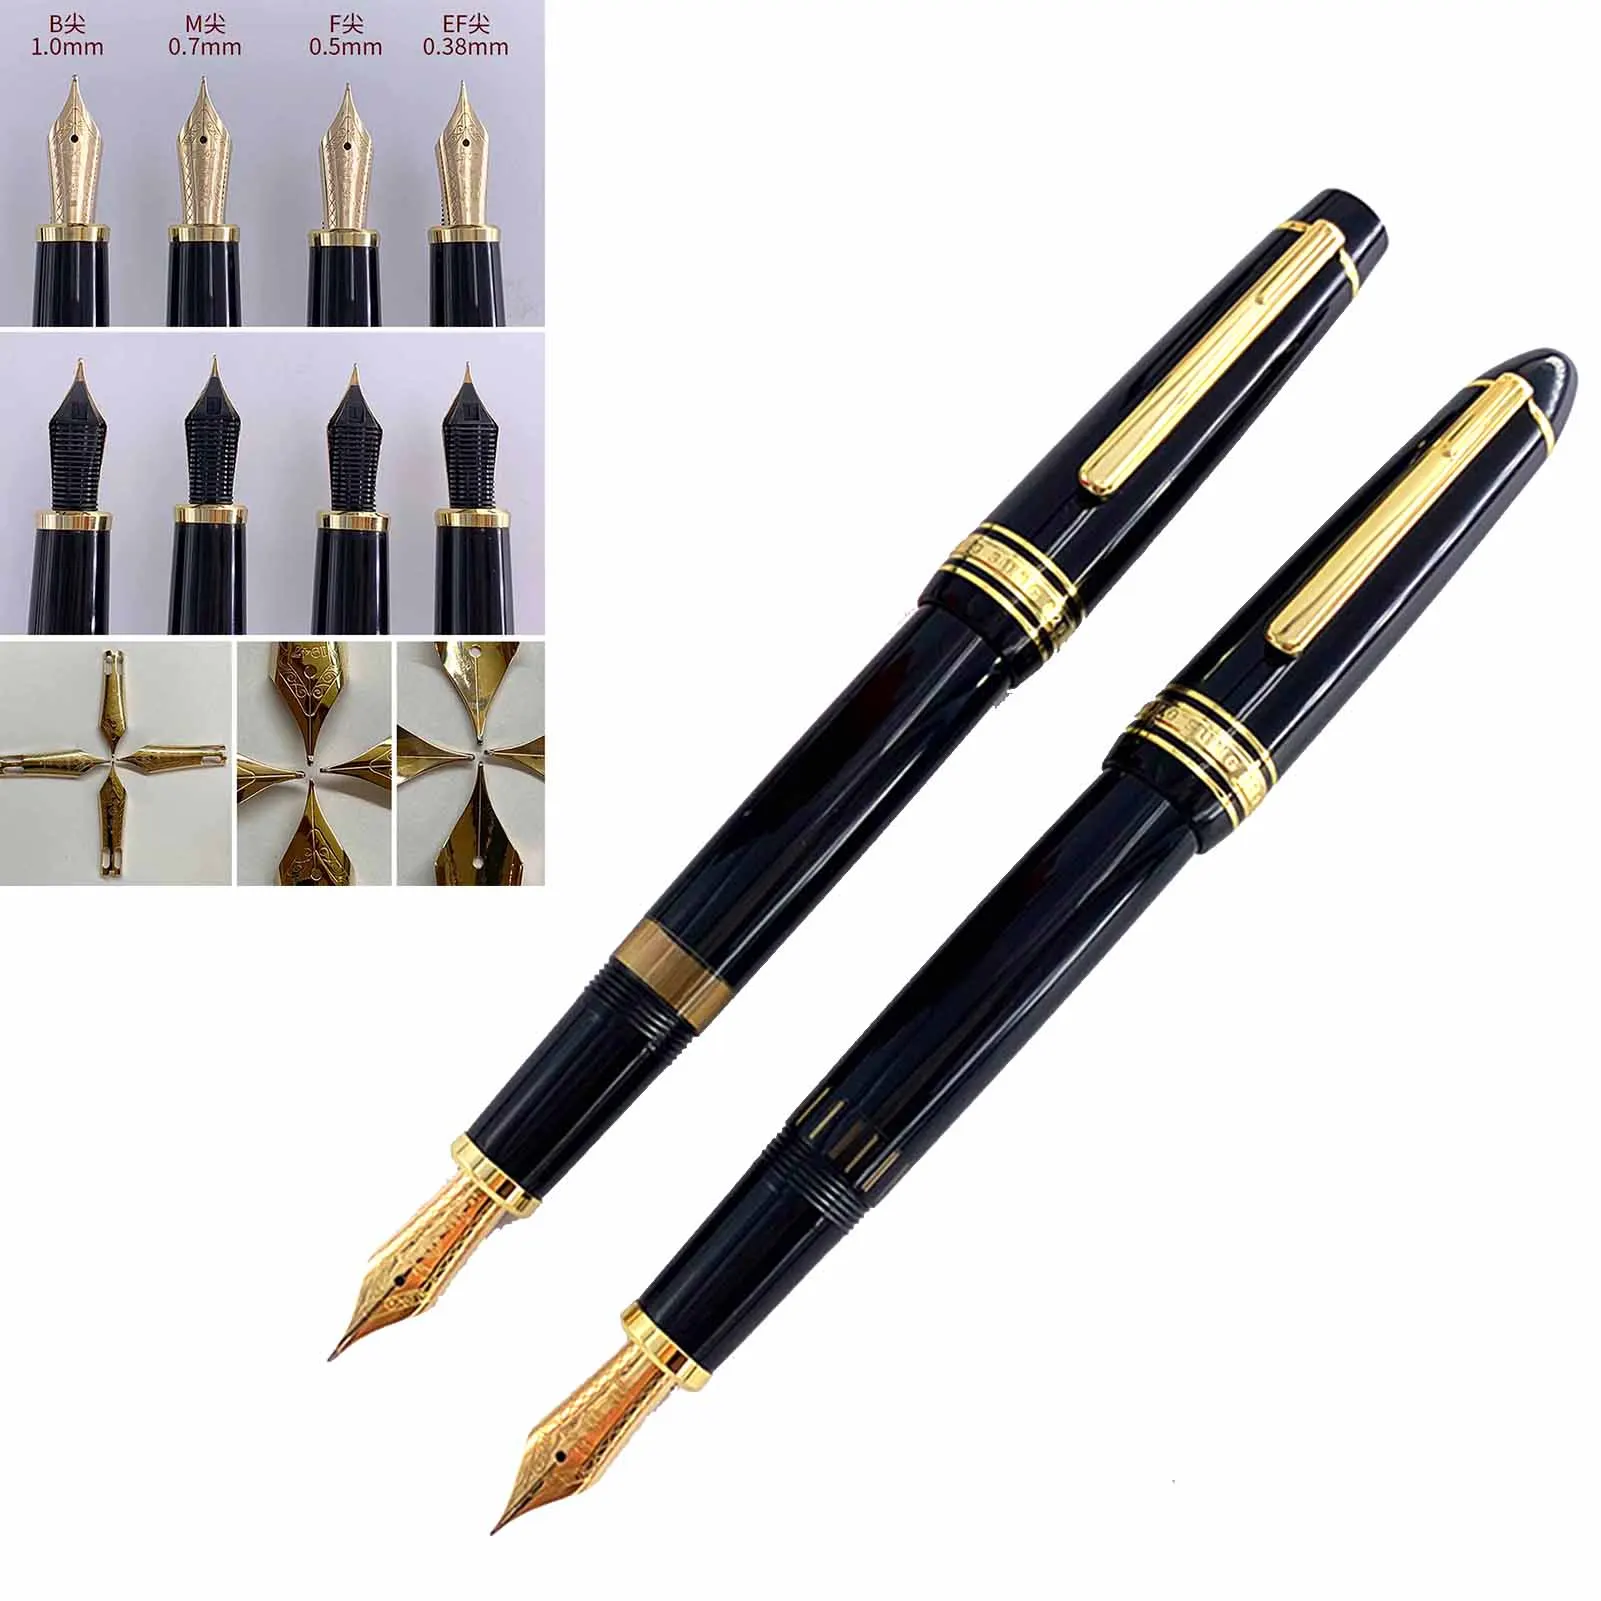 Yong sheng 629 Fountain Pen 14K Gold Large iridium EF/F nib Resin ink pnes Stationery Office school Writing pre-order